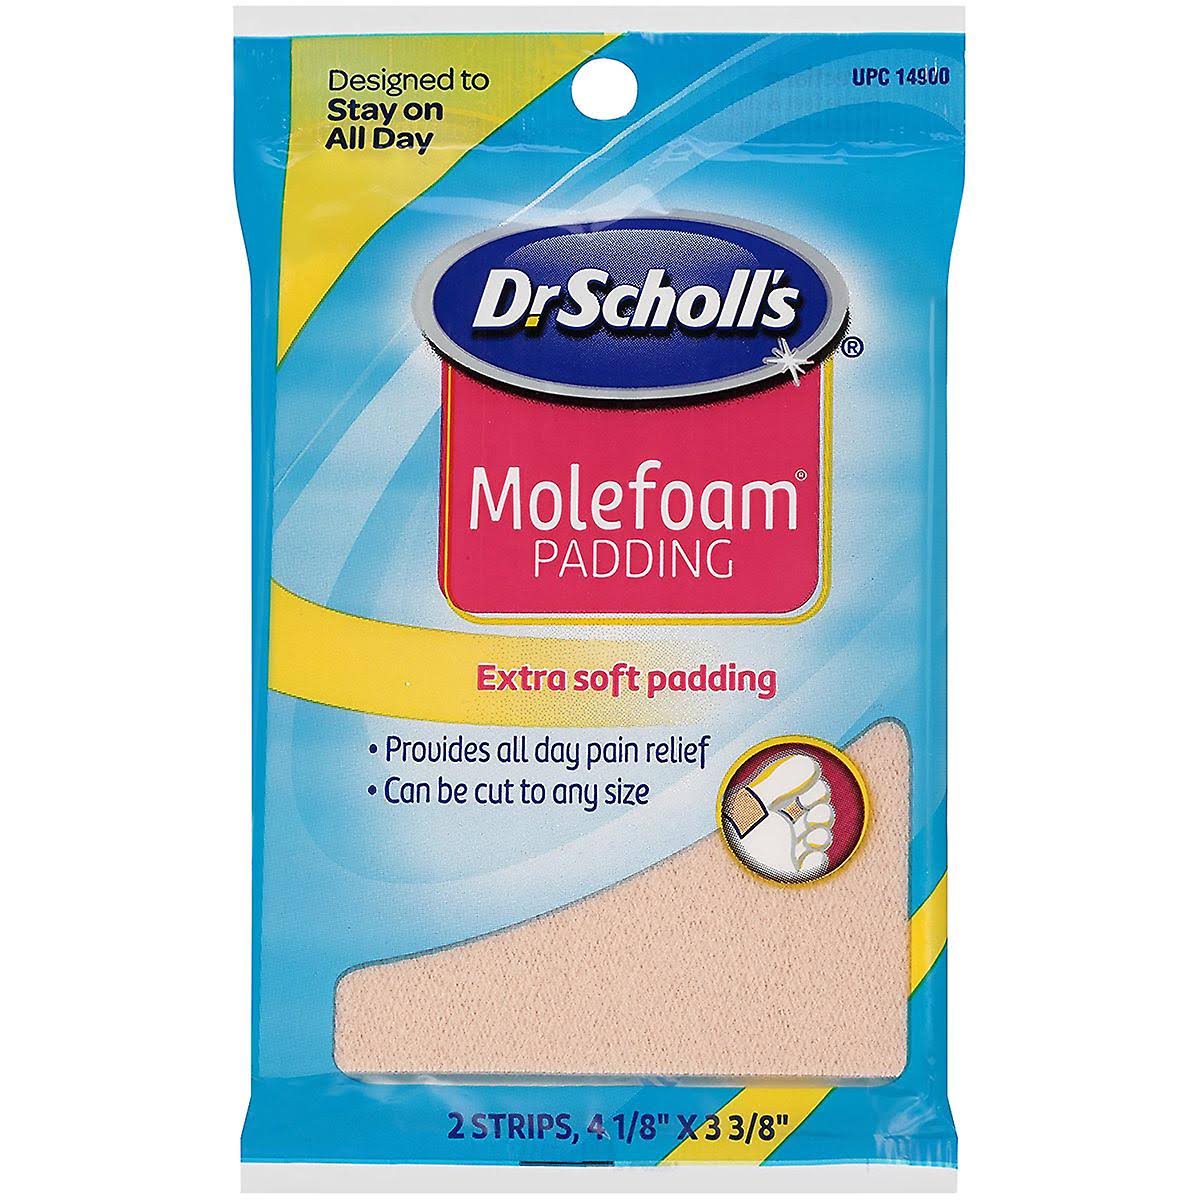 Bayer Dr Scholl's Moalfoam Padding - 2 Pack